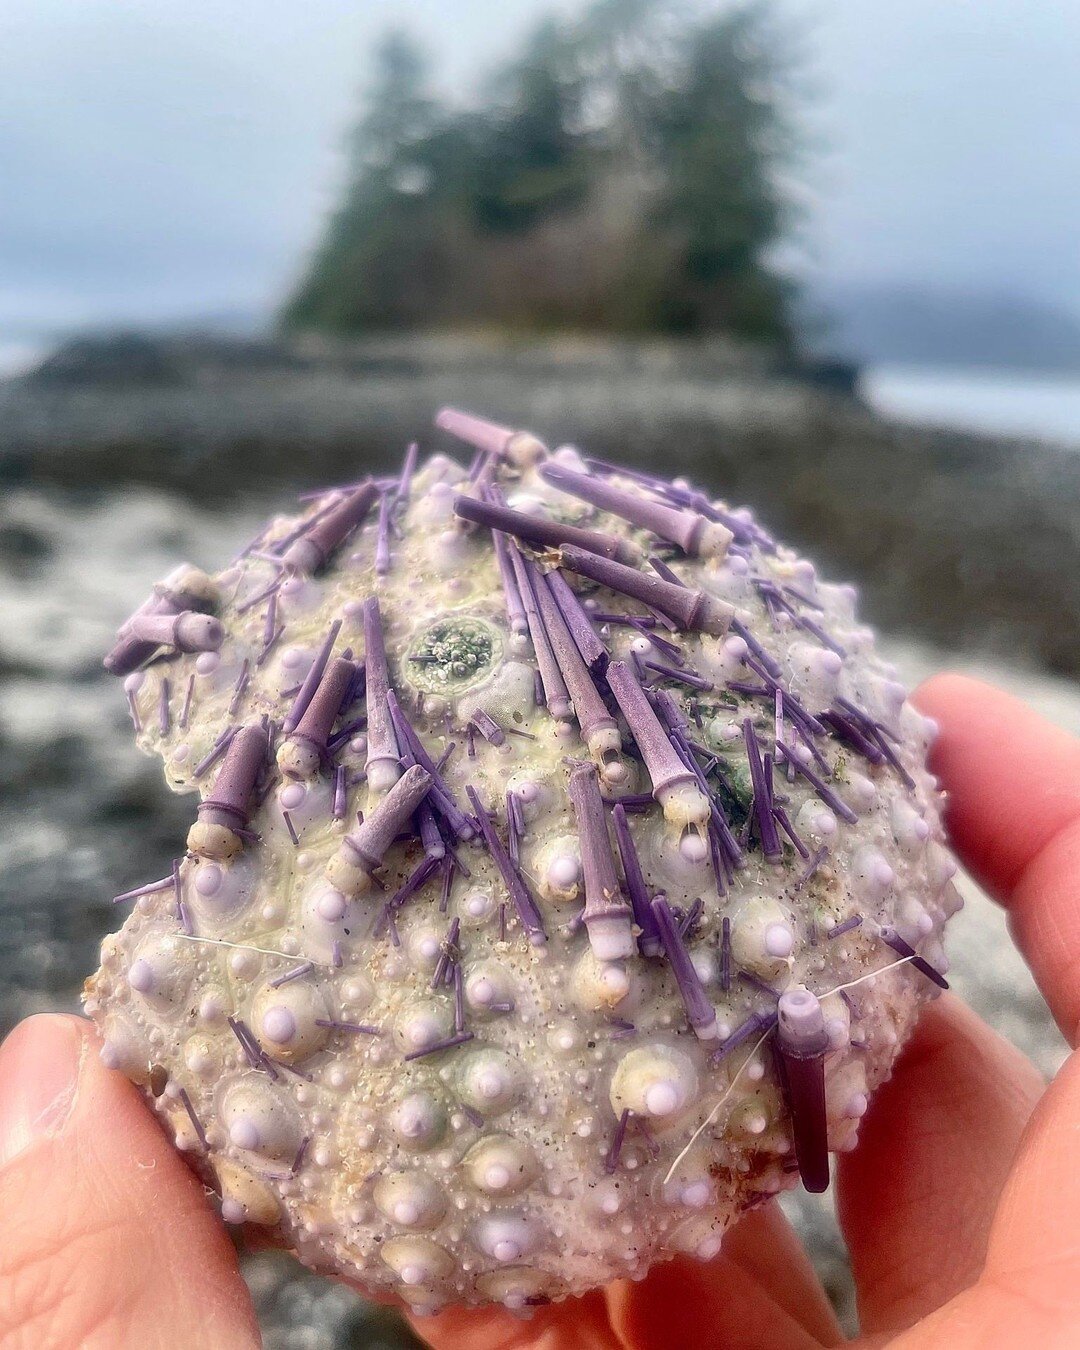 Purple sea urchin shell found while beach combing. 

#seaurchinshell 
#beachcombing 
#beachfinds 
#getoutside 
#experiencesoverthings 
#photooftheday 
#nature 
#travel 
#sea 
#vitaminsea 
#visitsitka
#sitkaalaska
#travelsitka
#sitkalife
#southeastala